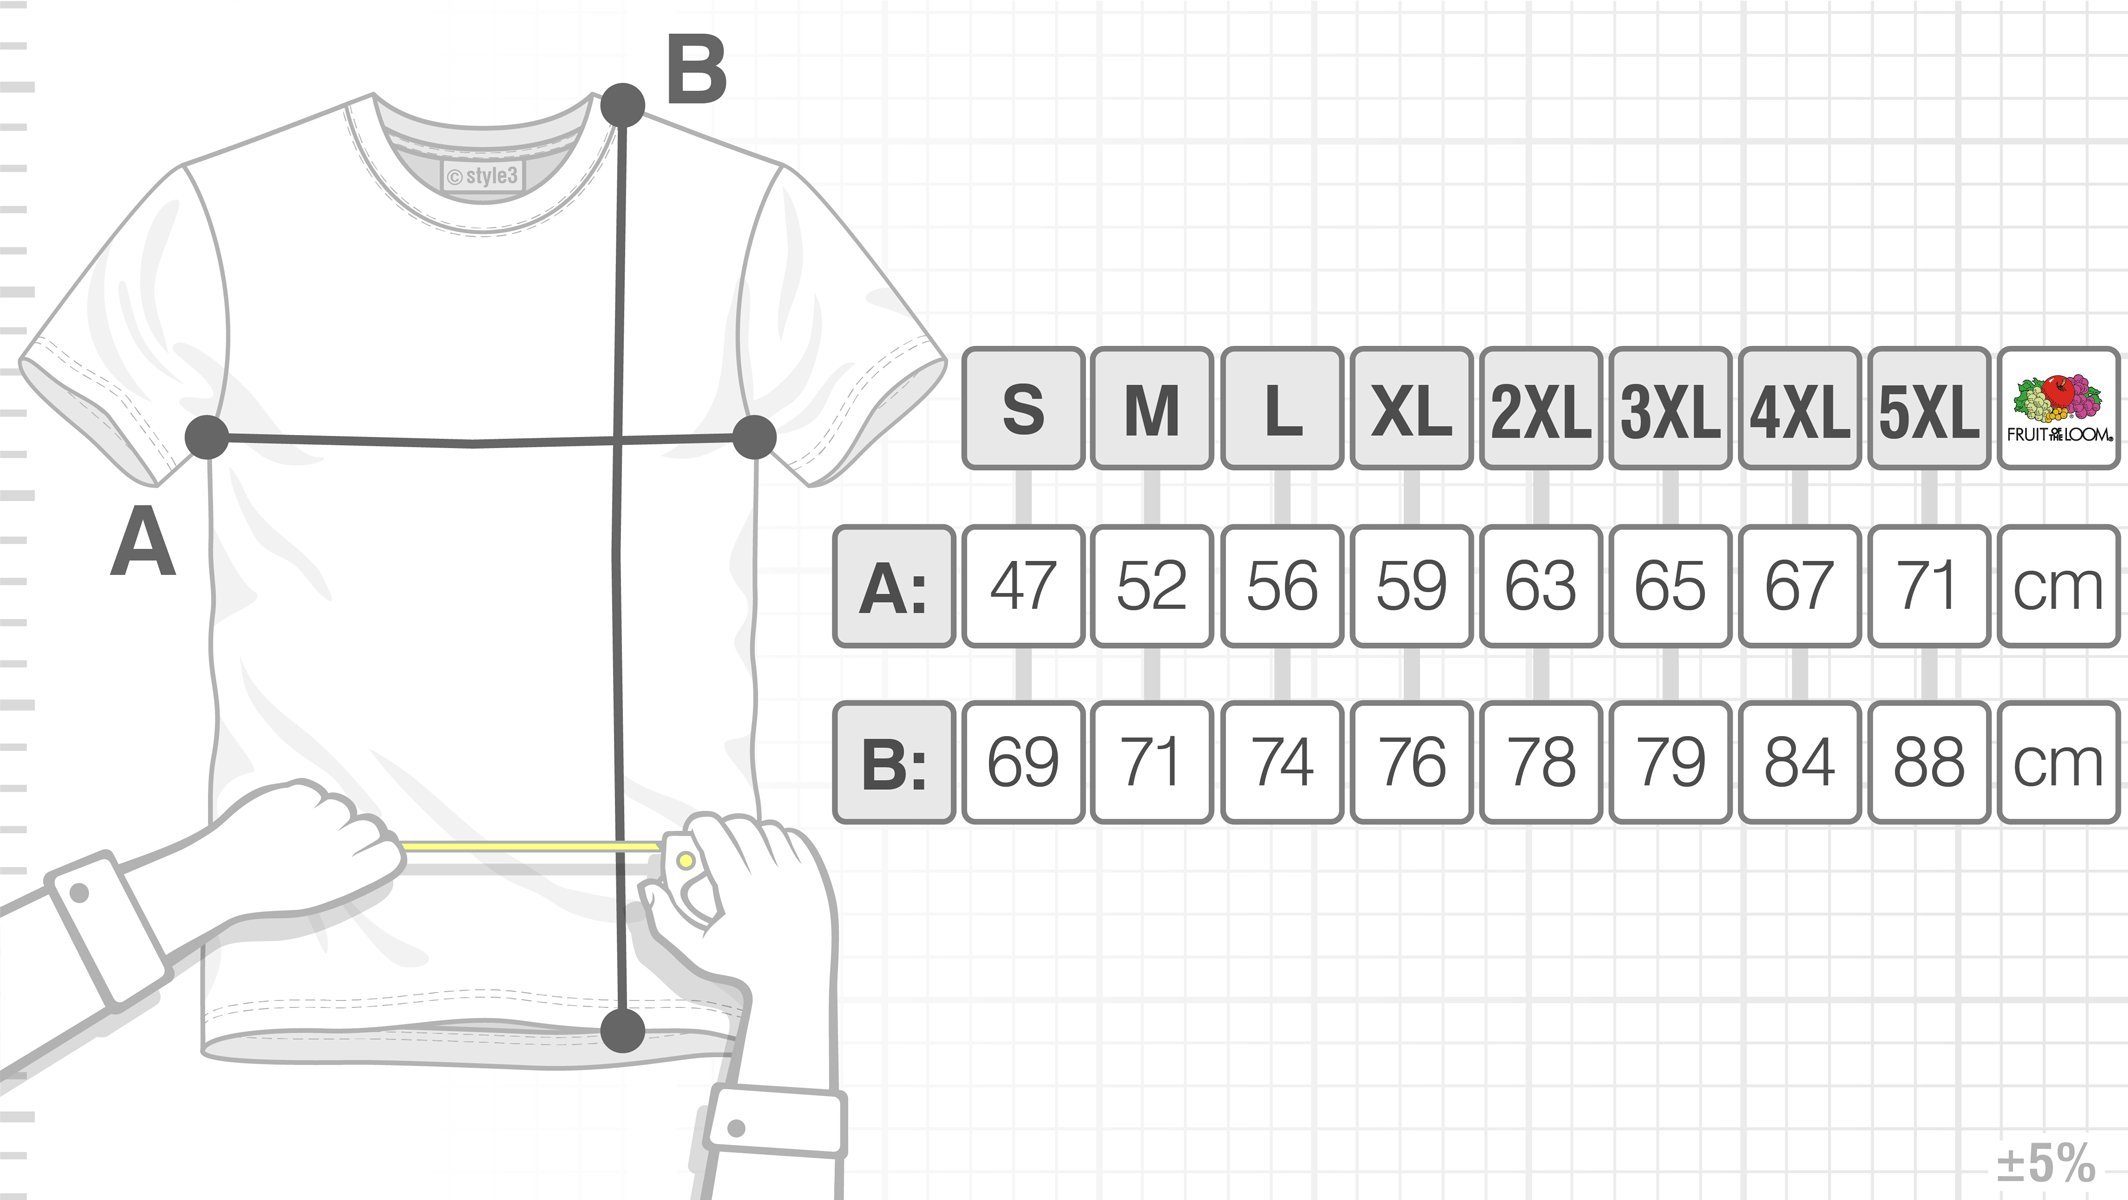 Begleiter Portal Cube grau Companion meliert Gamer style3 T-Shirt Portale Herren game Chell Würfel Print-Shirt